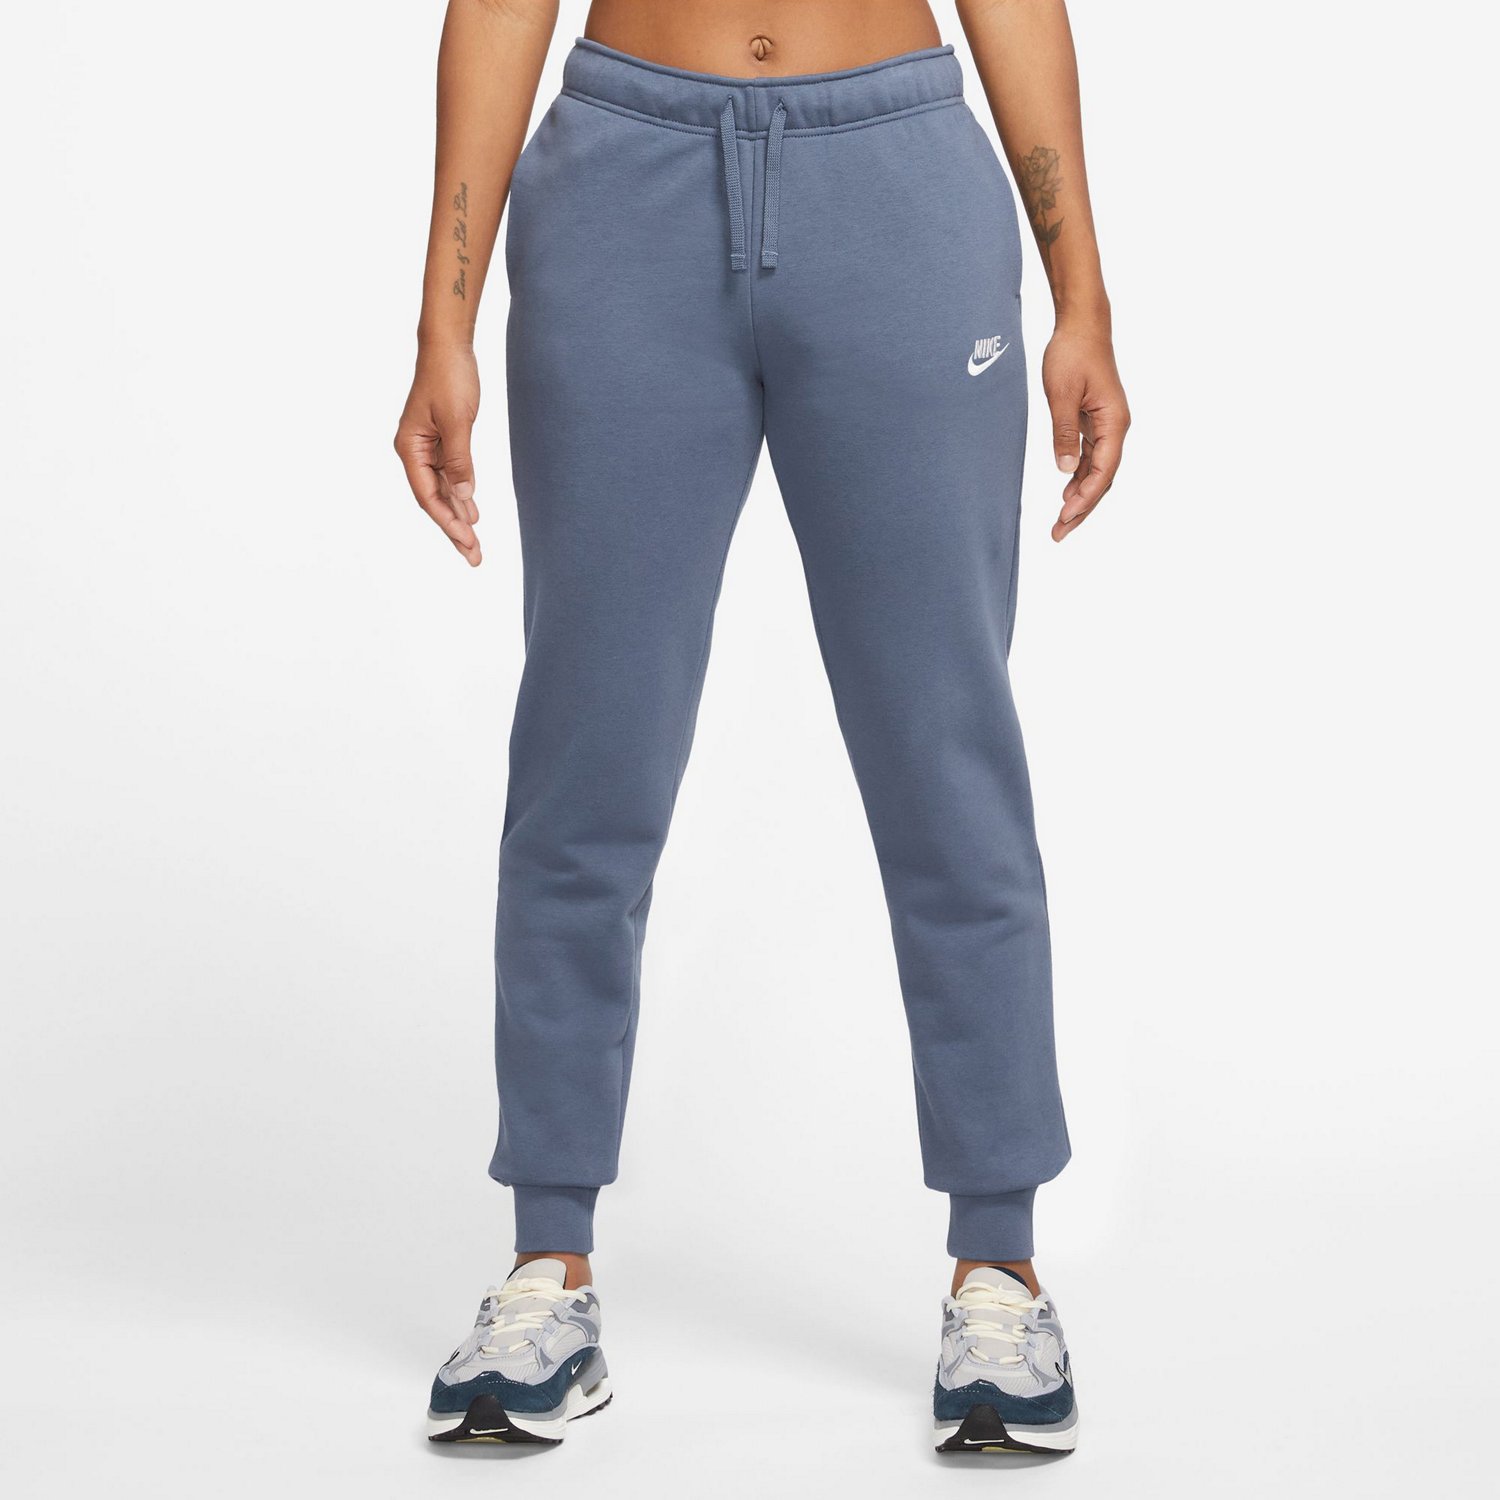 Blue Nike Sweatpants  Price Match Guaranteed